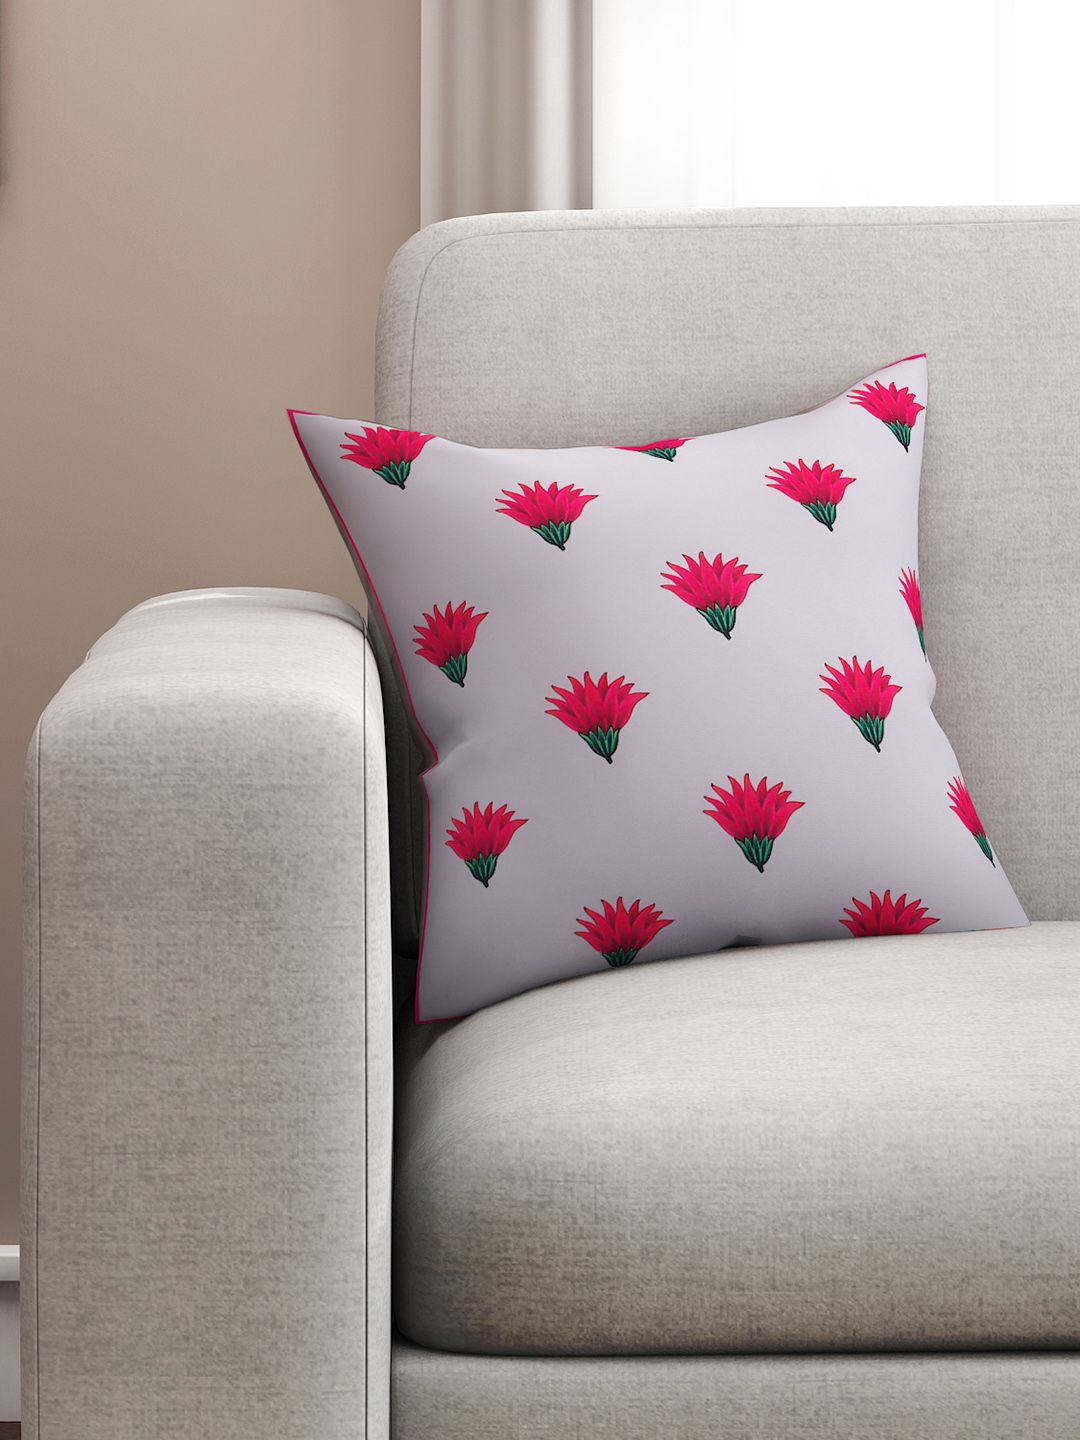 SEJ by Nisha Gupta Grey Single Floral Square Cushion Cover Price in India